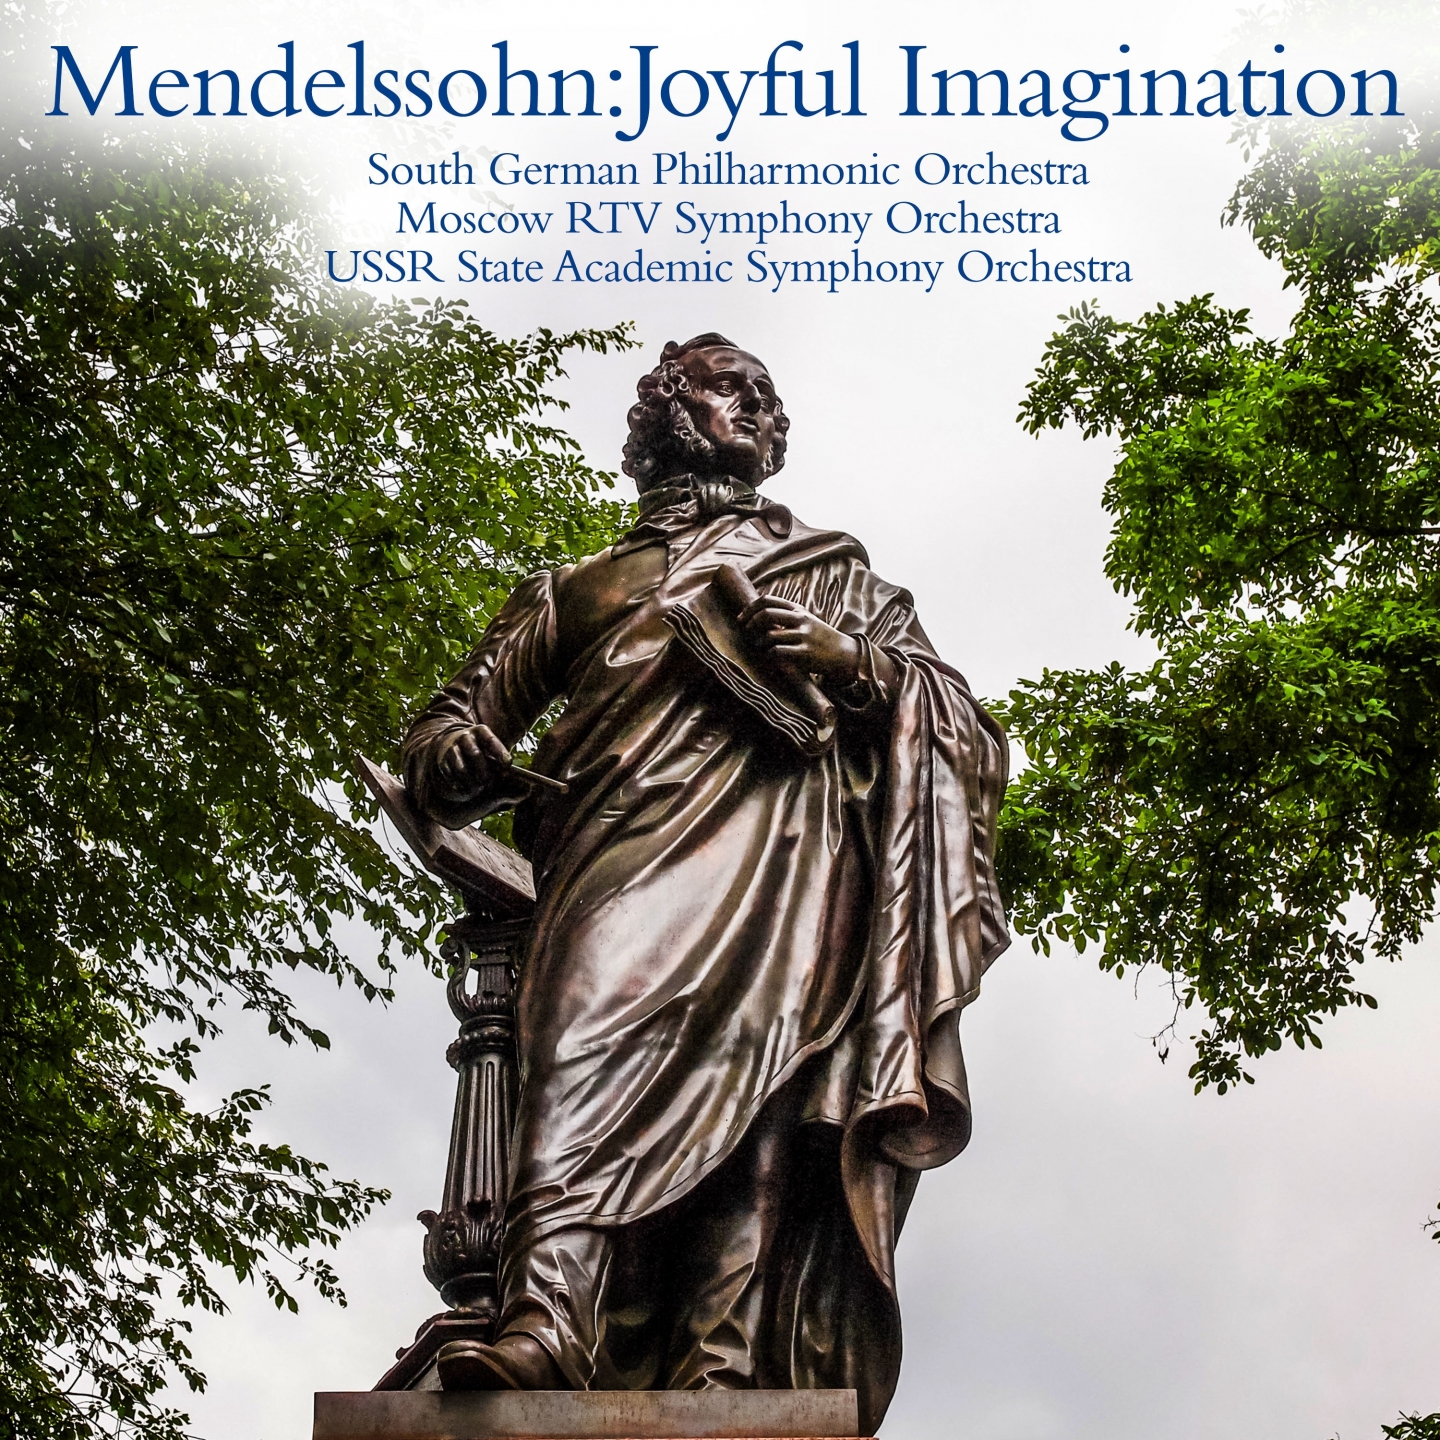 Mendelssohn:Joyful imagination